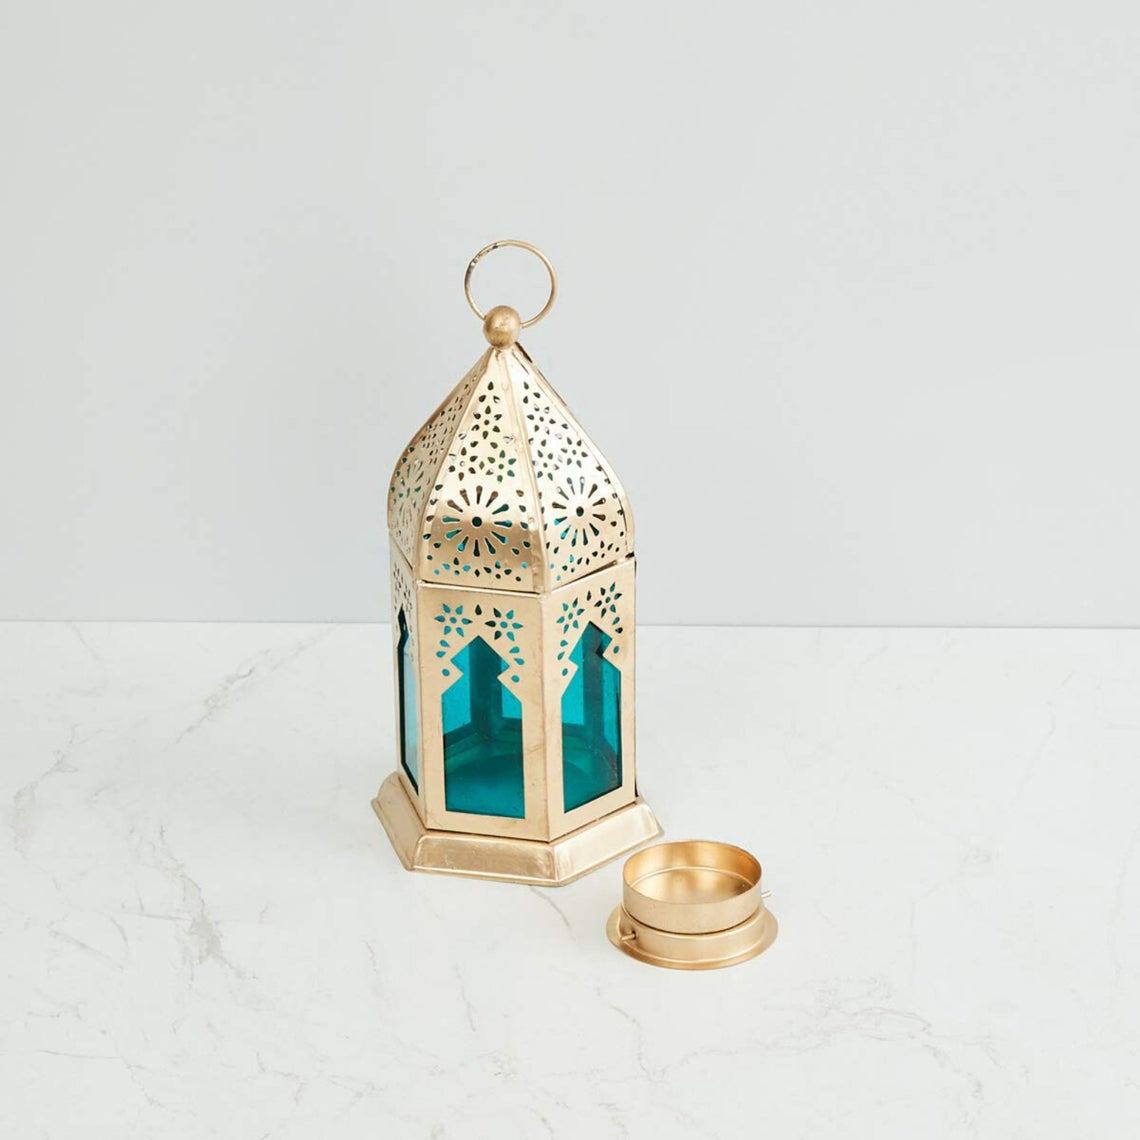 Buy Antique Decorative Tea Light Lantern for Ramadan Decorations